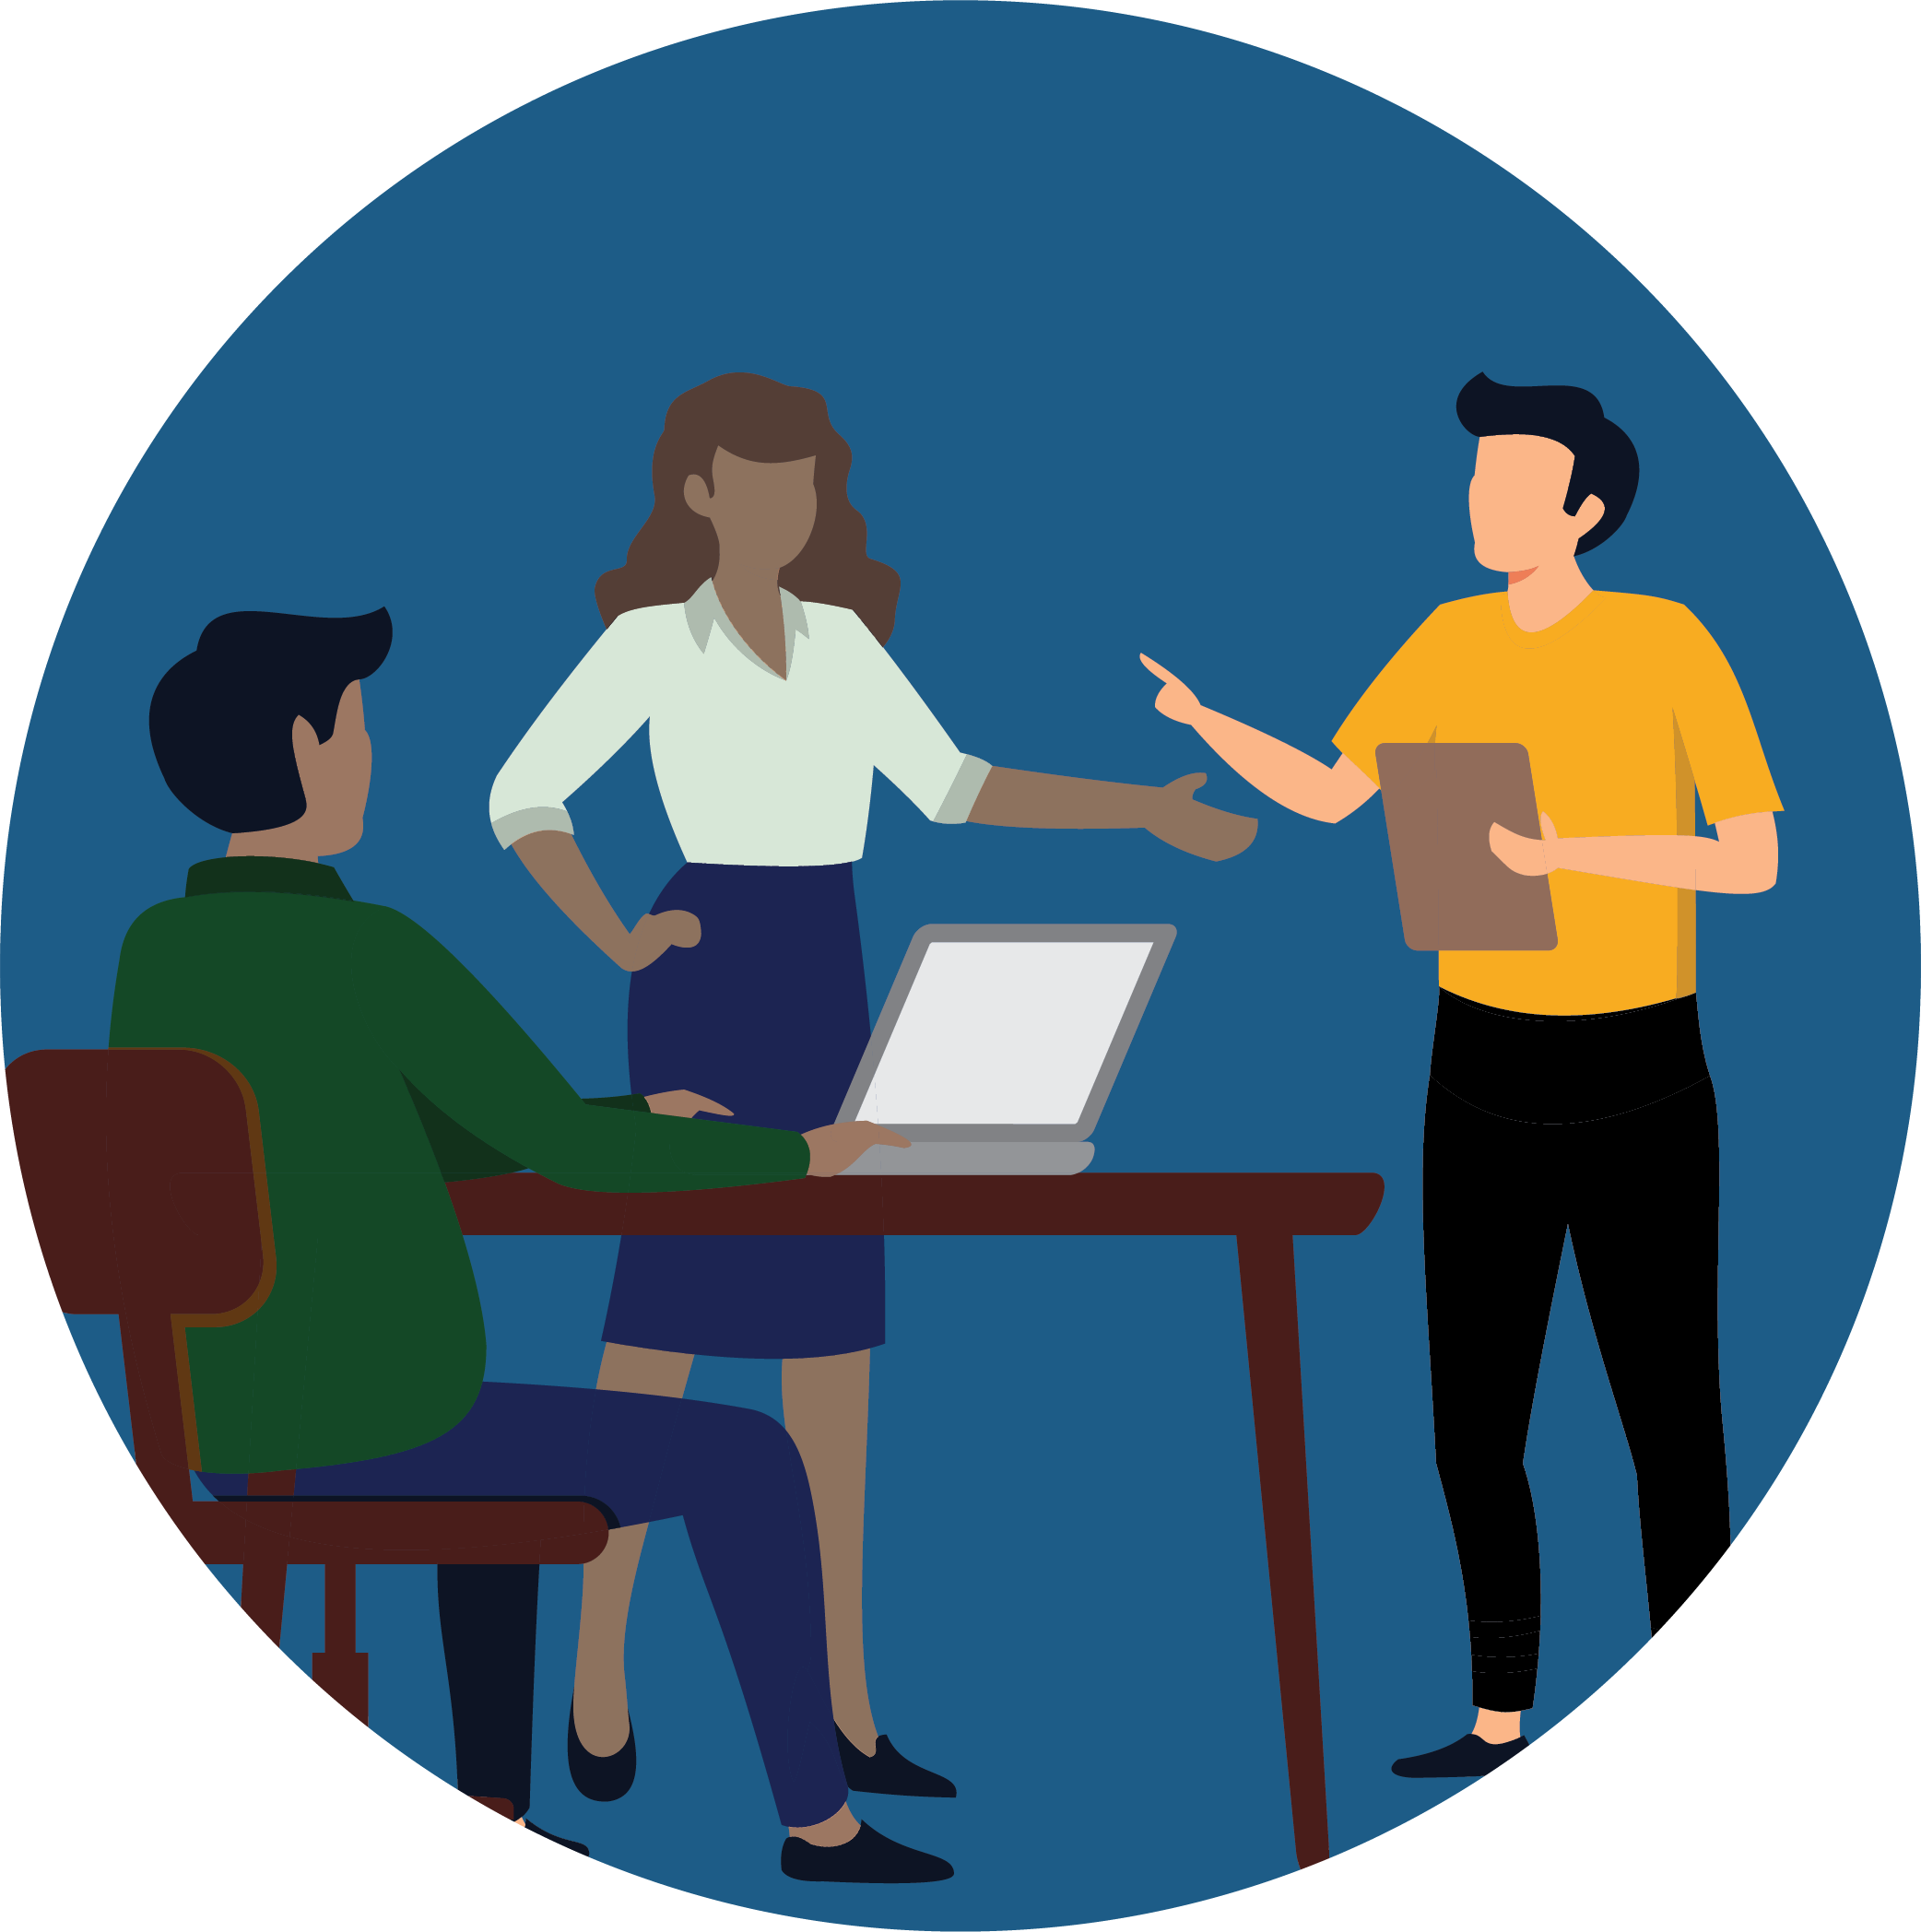 Job fair icon showing three figures talking